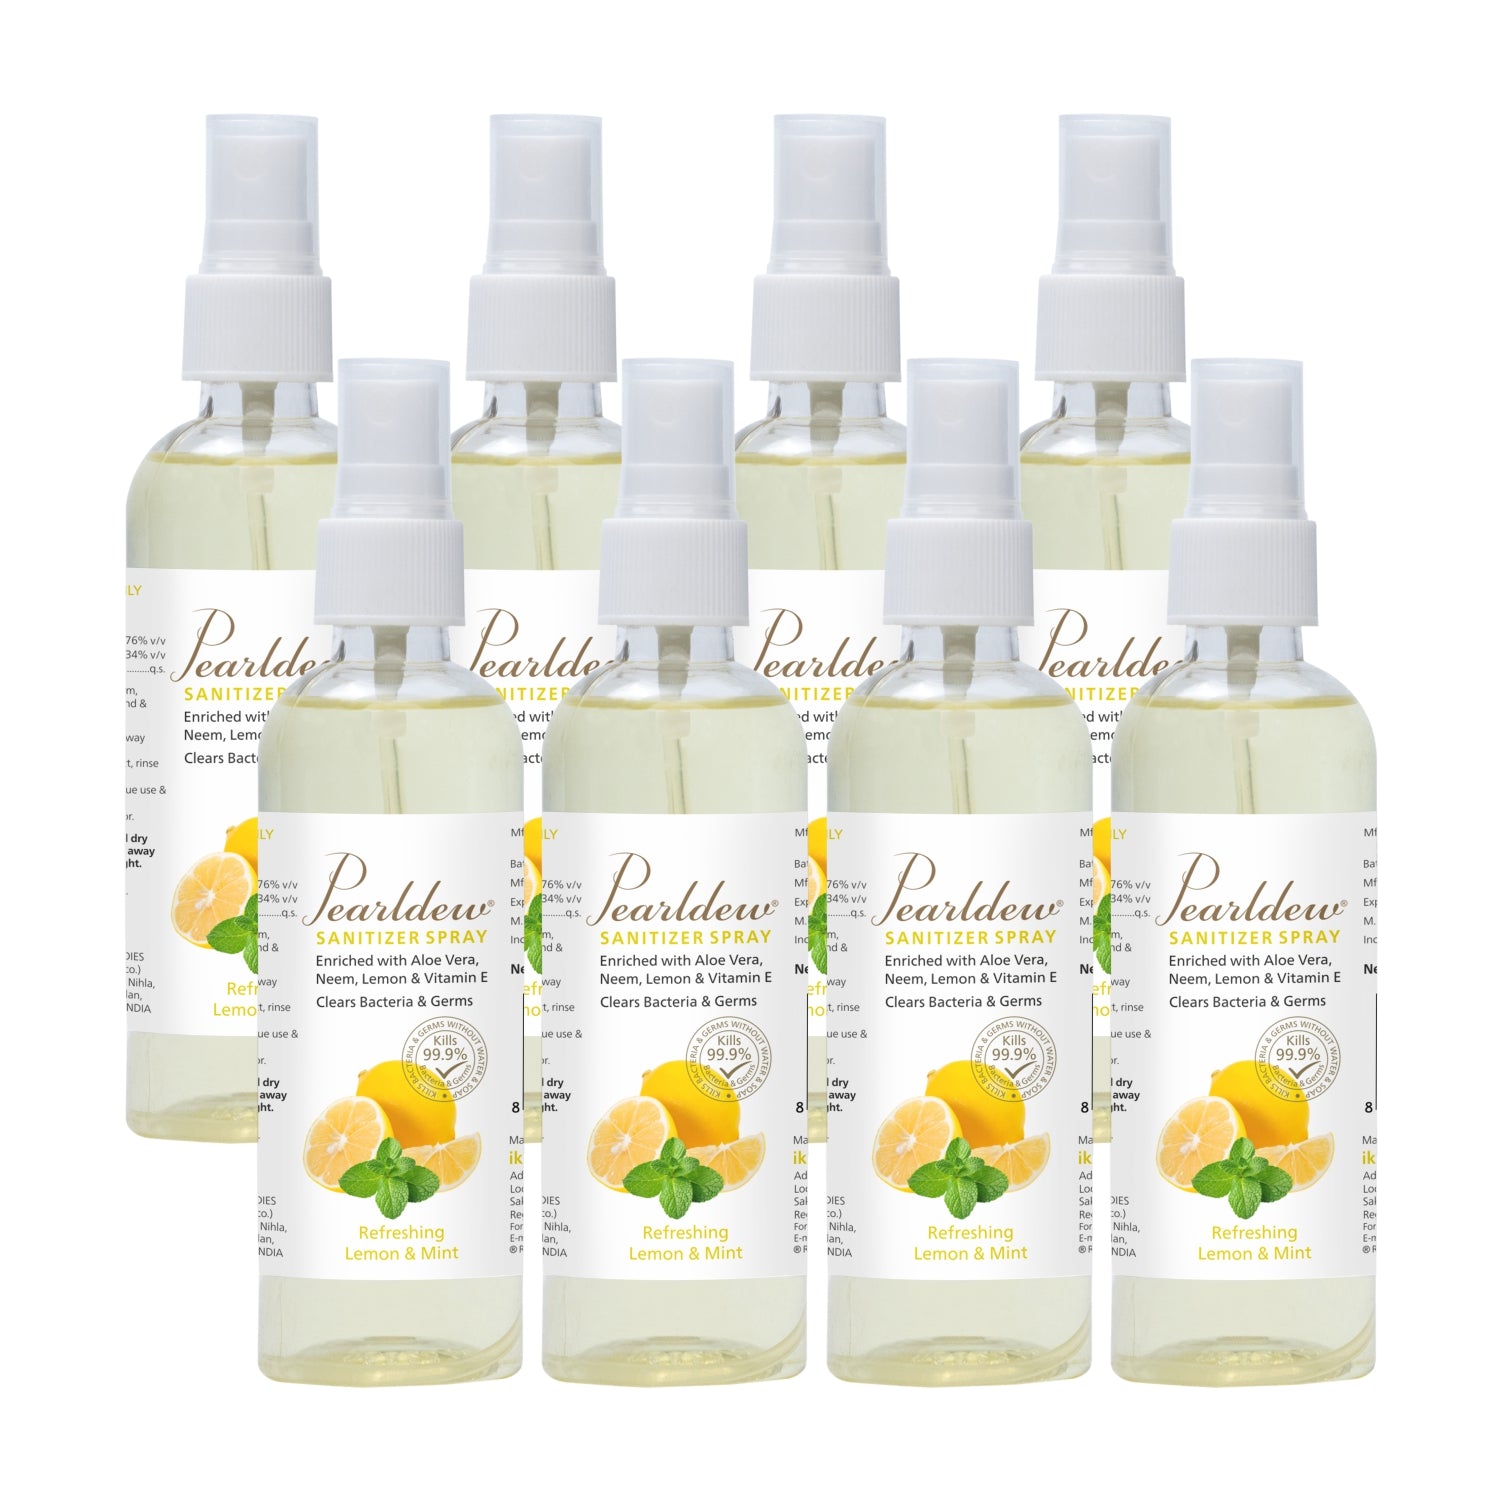 Pearldew Hand Sanitizer Spray (Refreshing Lemon & Mint) 120 ml